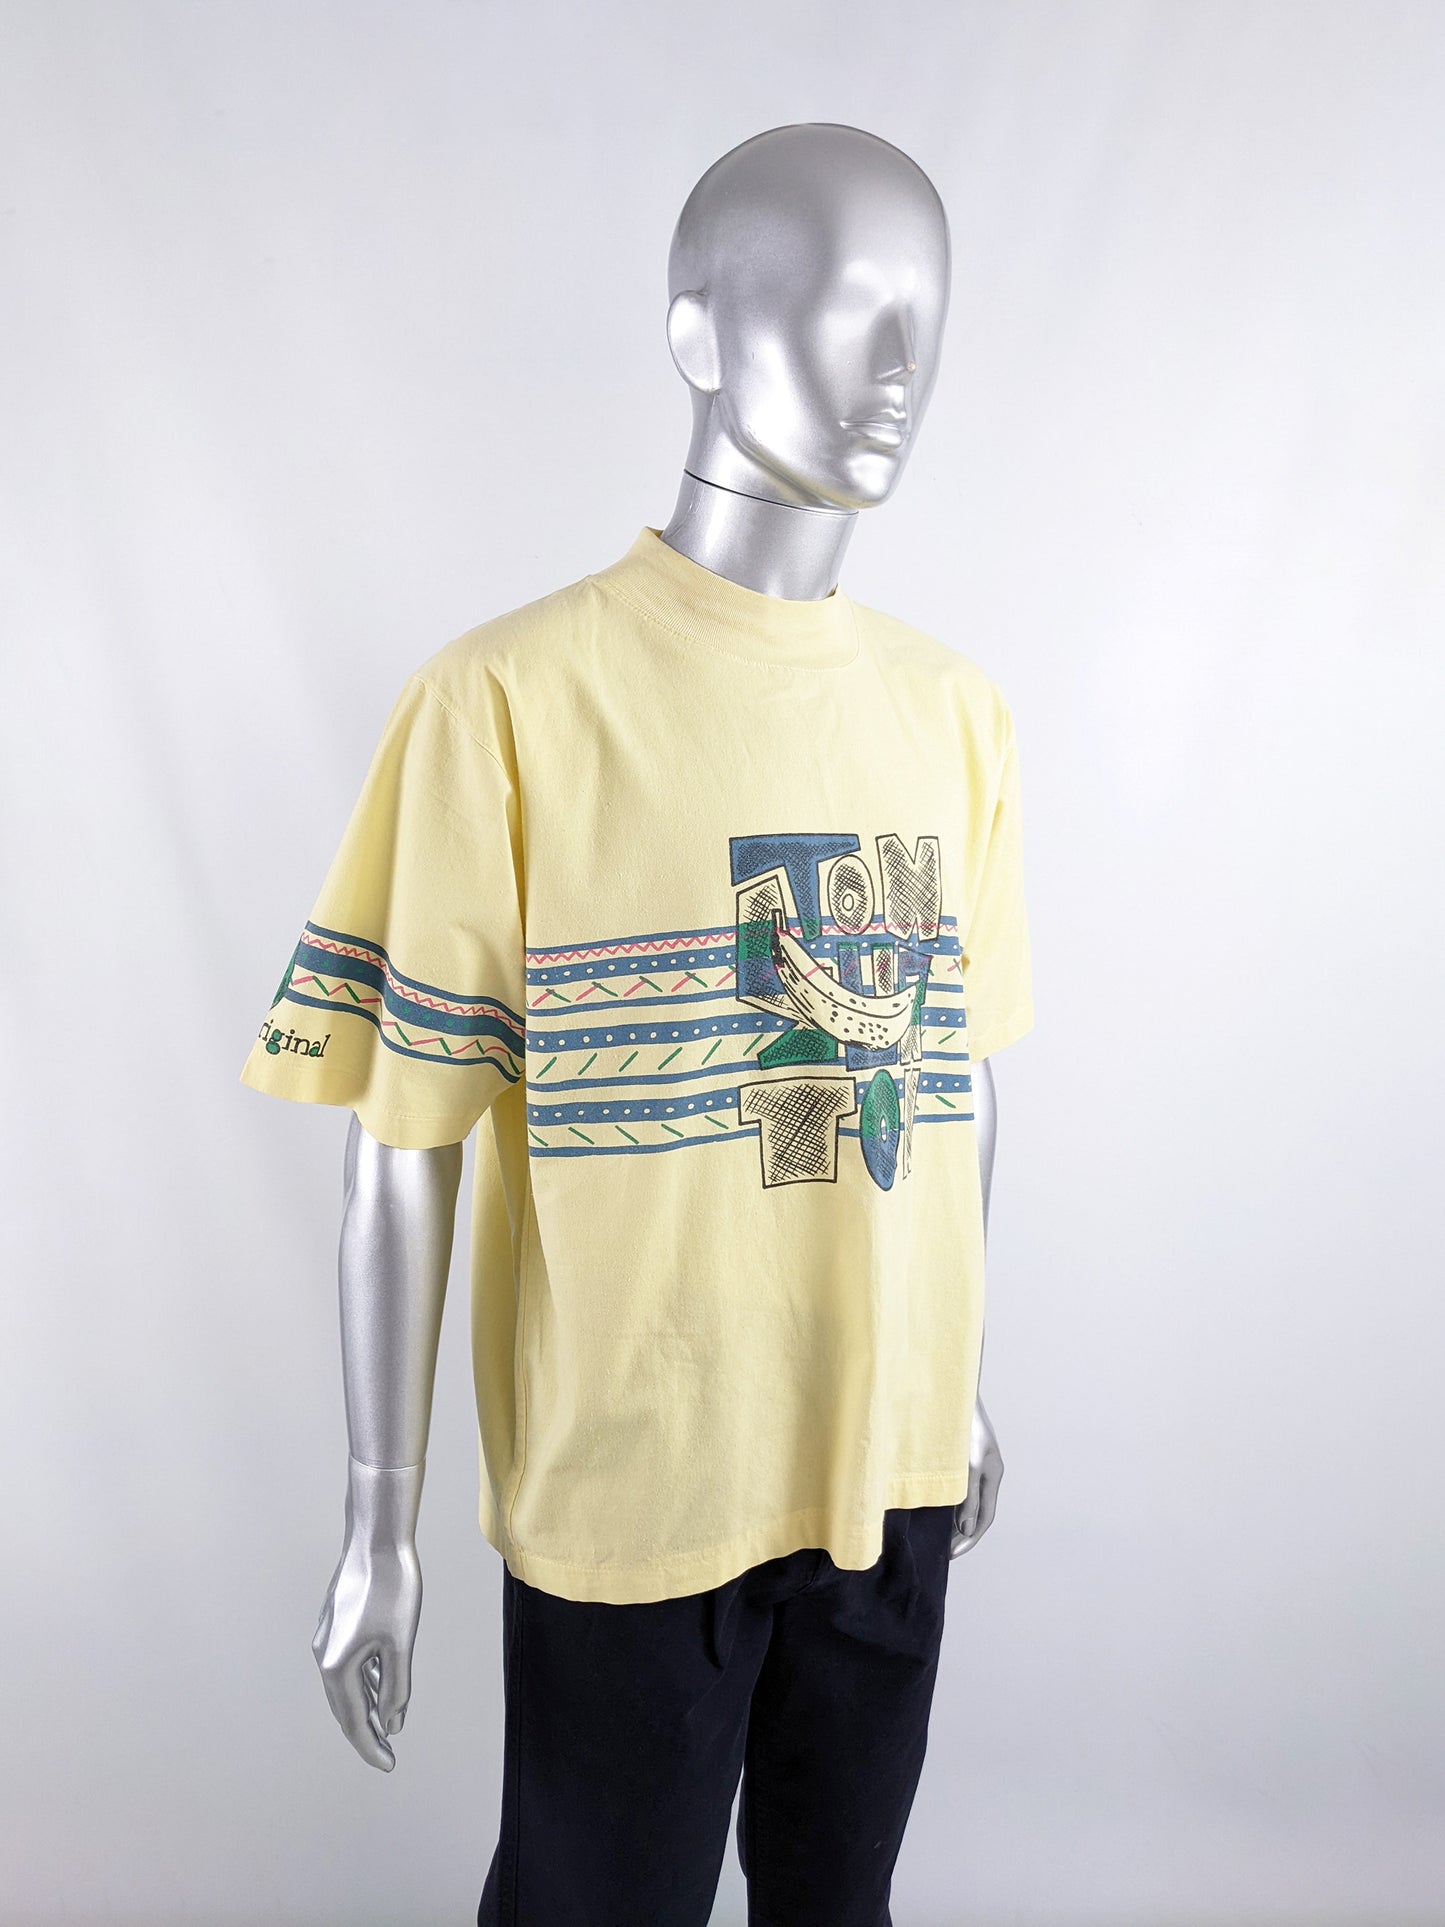 Ton Sur Ton Vintage Mens Pastel Yellow Banana T Shirt, 1980s